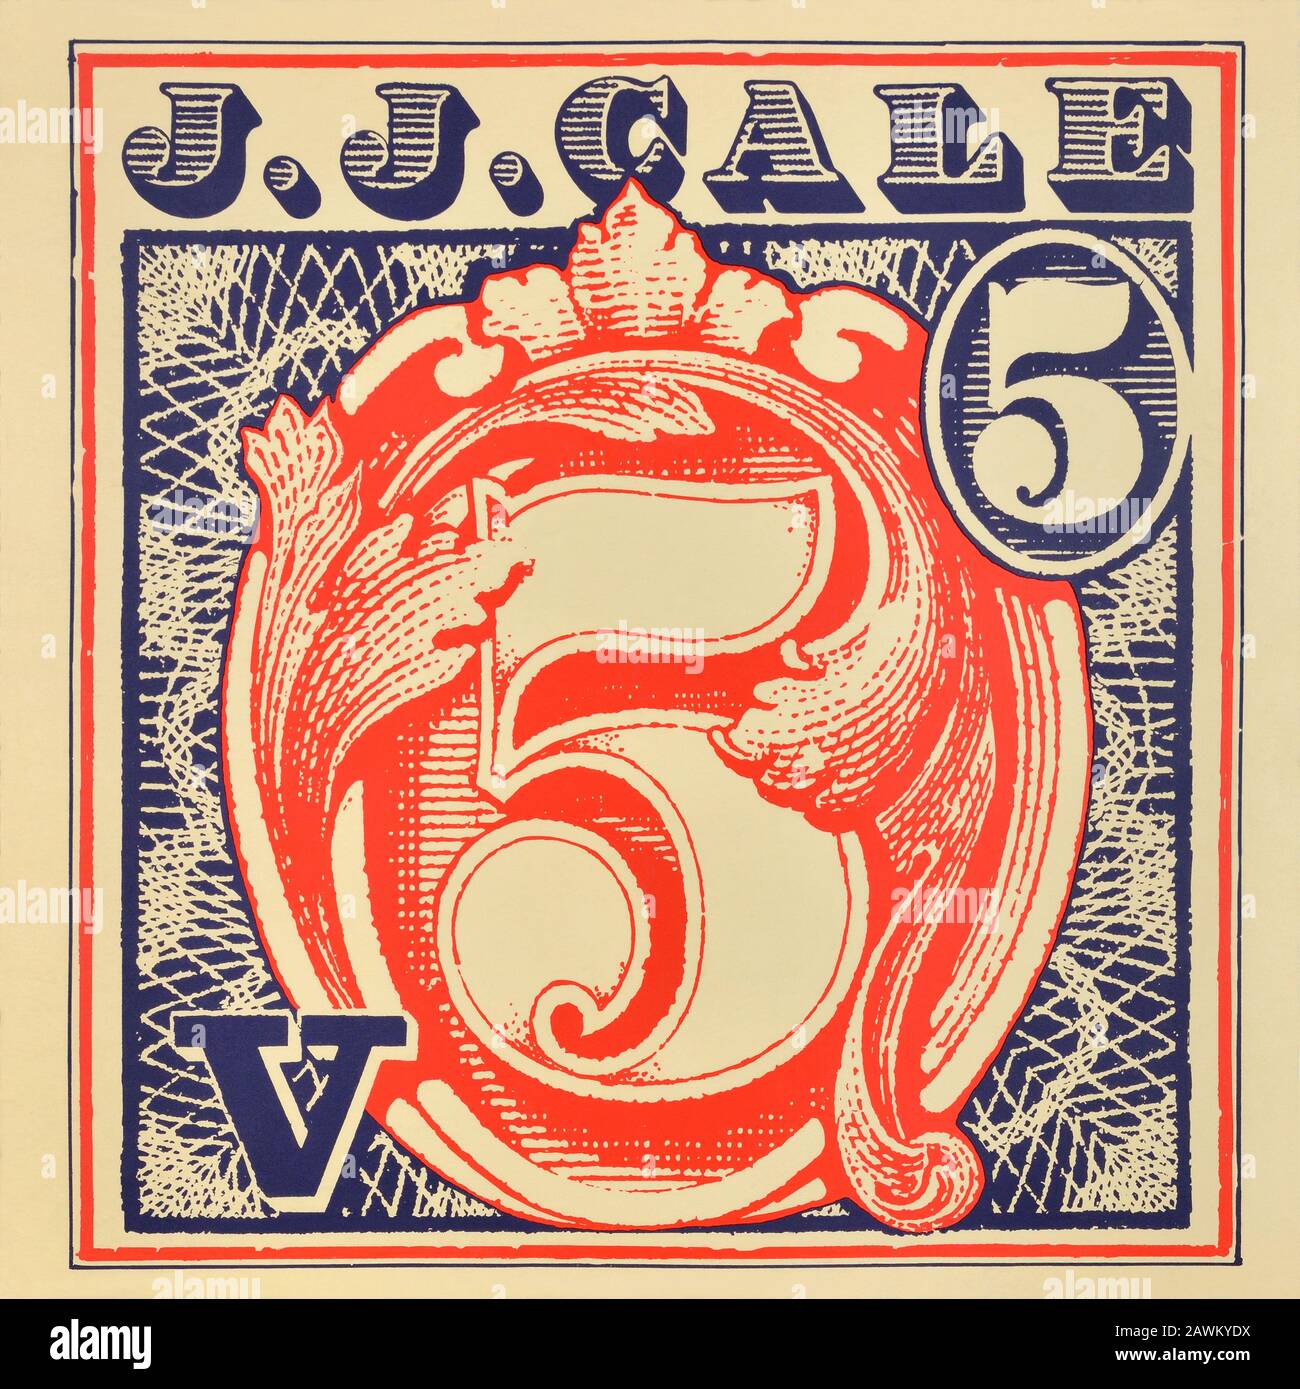 J.J. Cale - original vinyl album cover - 5 (five) - 1979 Stock Photo